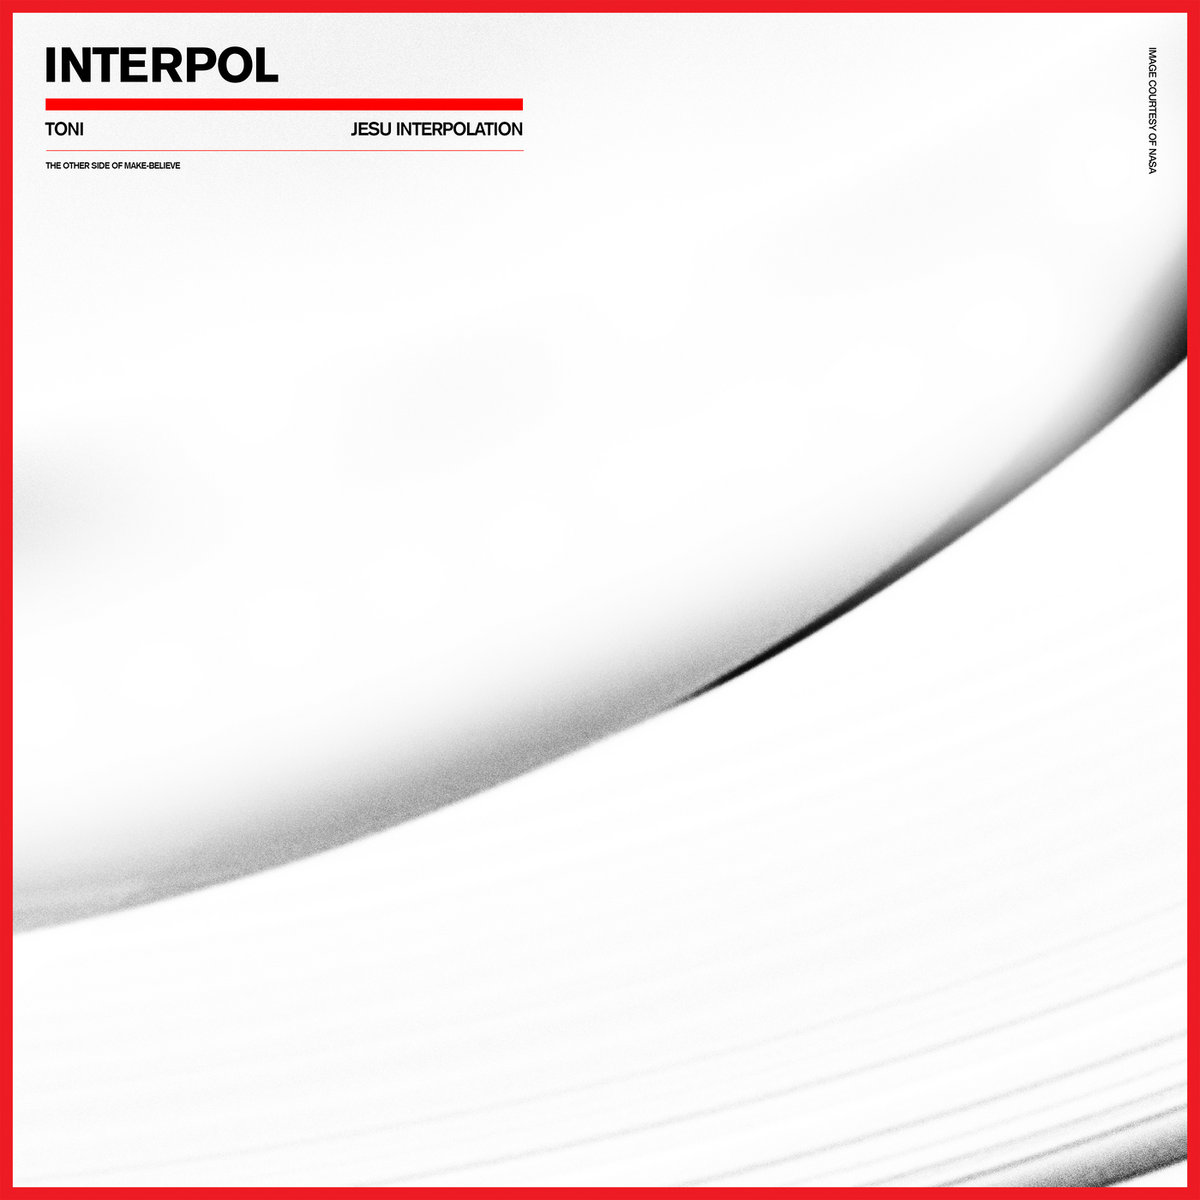 News – Interpol – Toni (Jesu Interpolation)